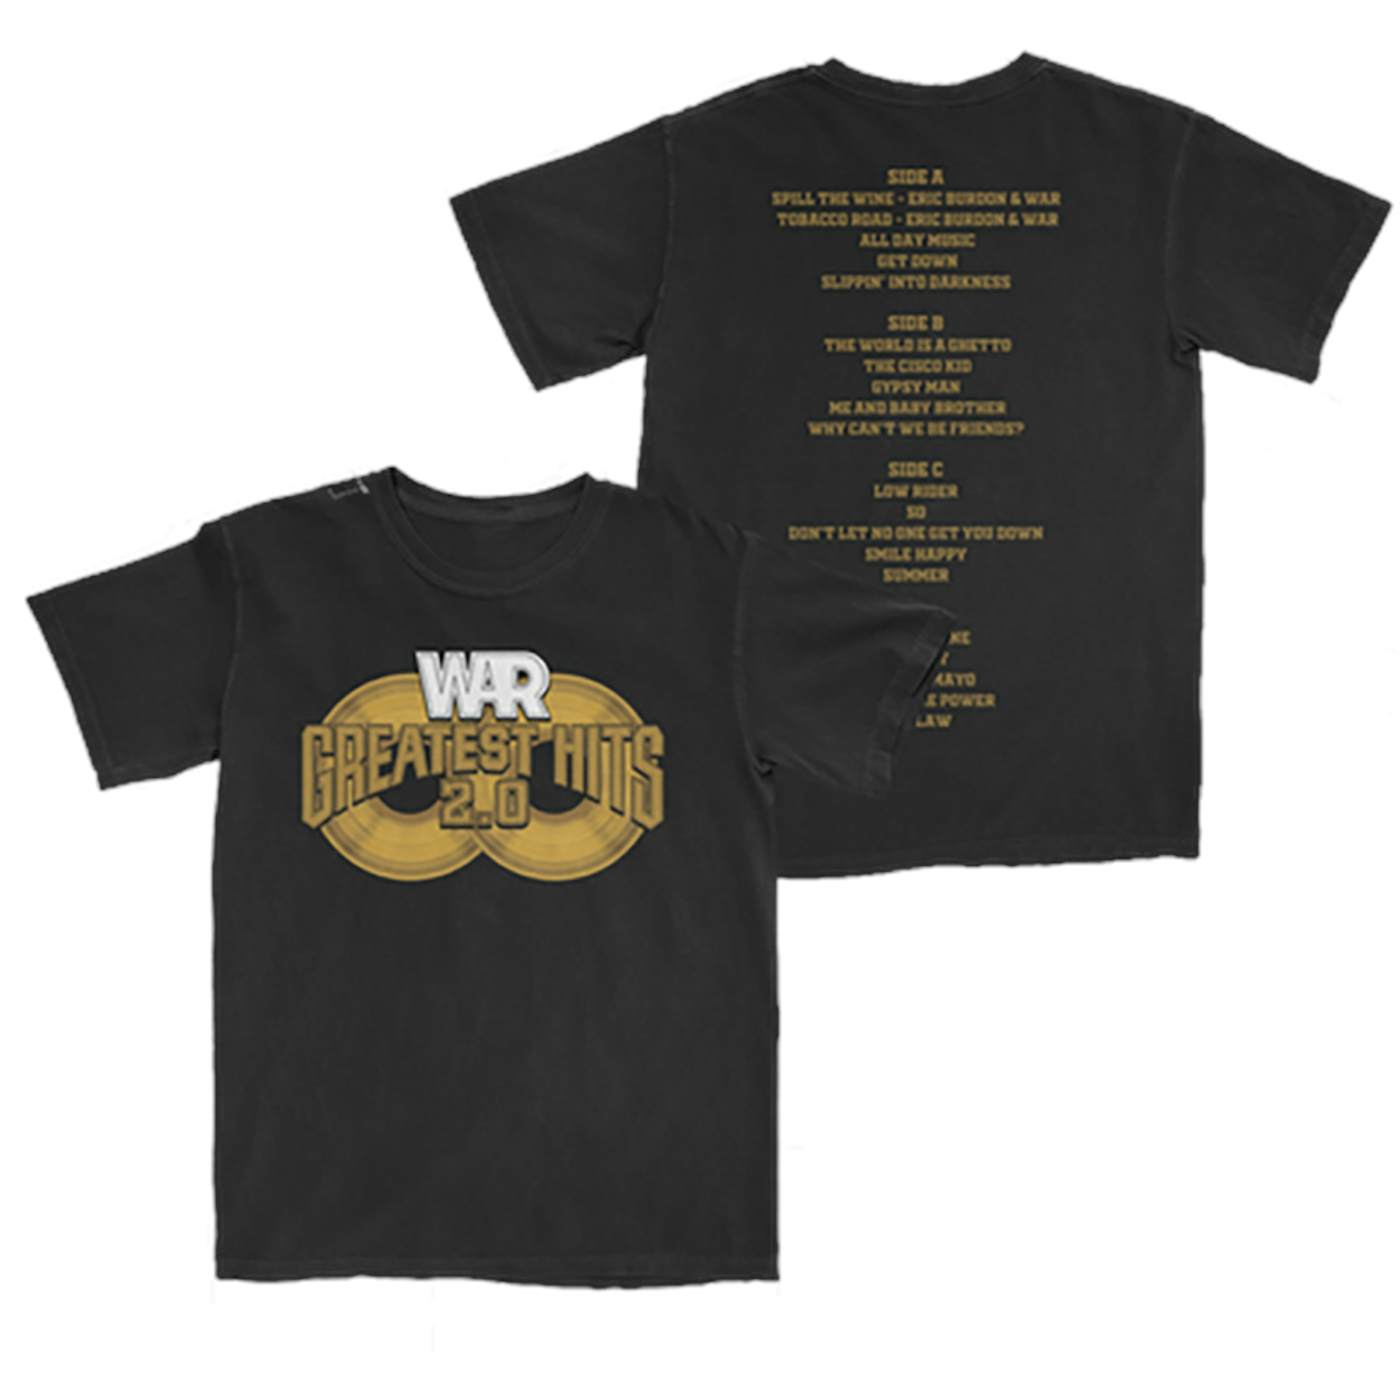 War Greatest Hits T-Shirt